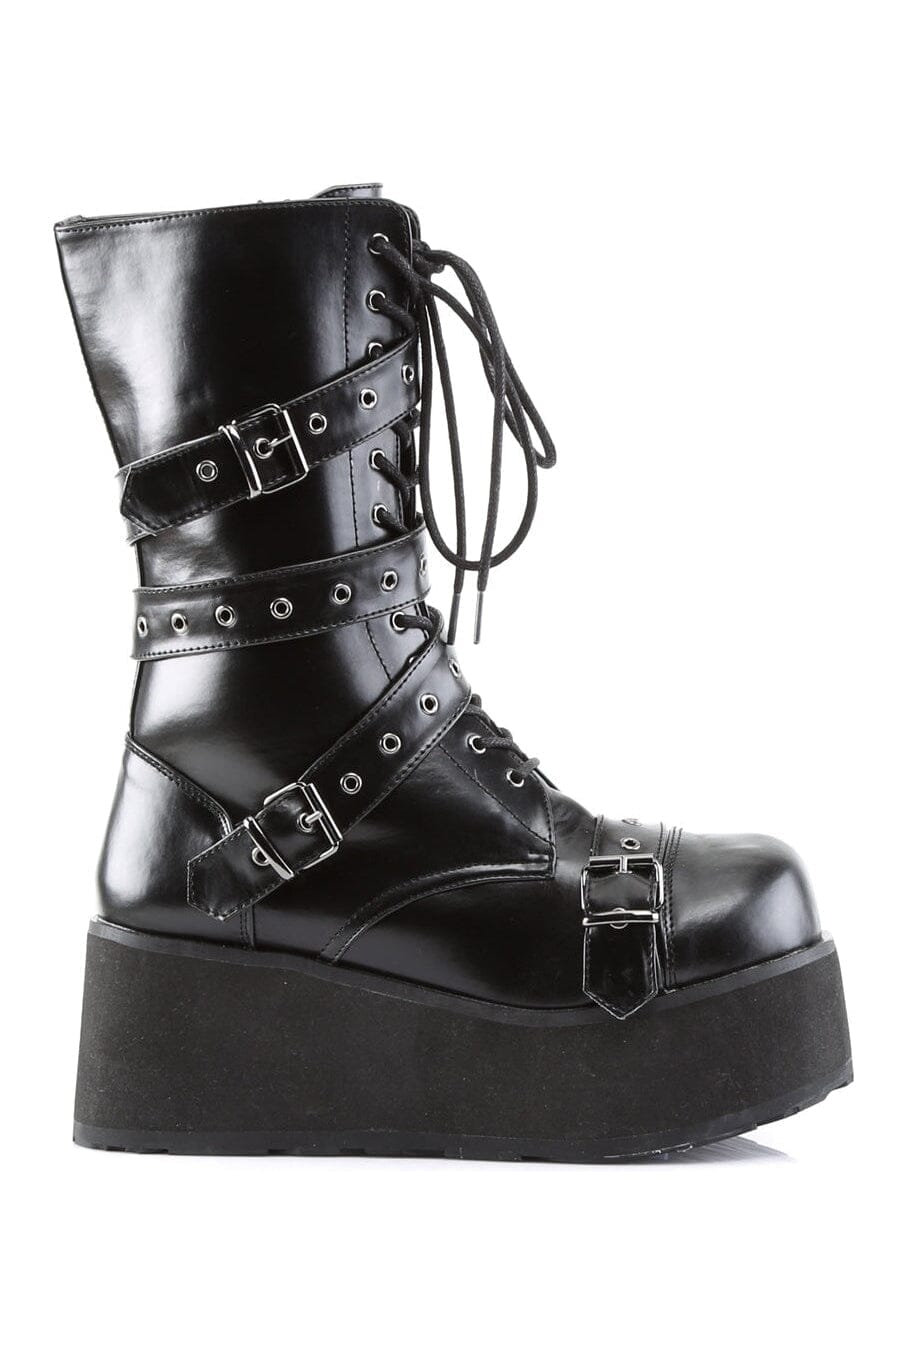 TRASHVILLE-205 Black Vegan Leather Knee Boot-Knee Boots-Demonia-SEXYSHOES.COM